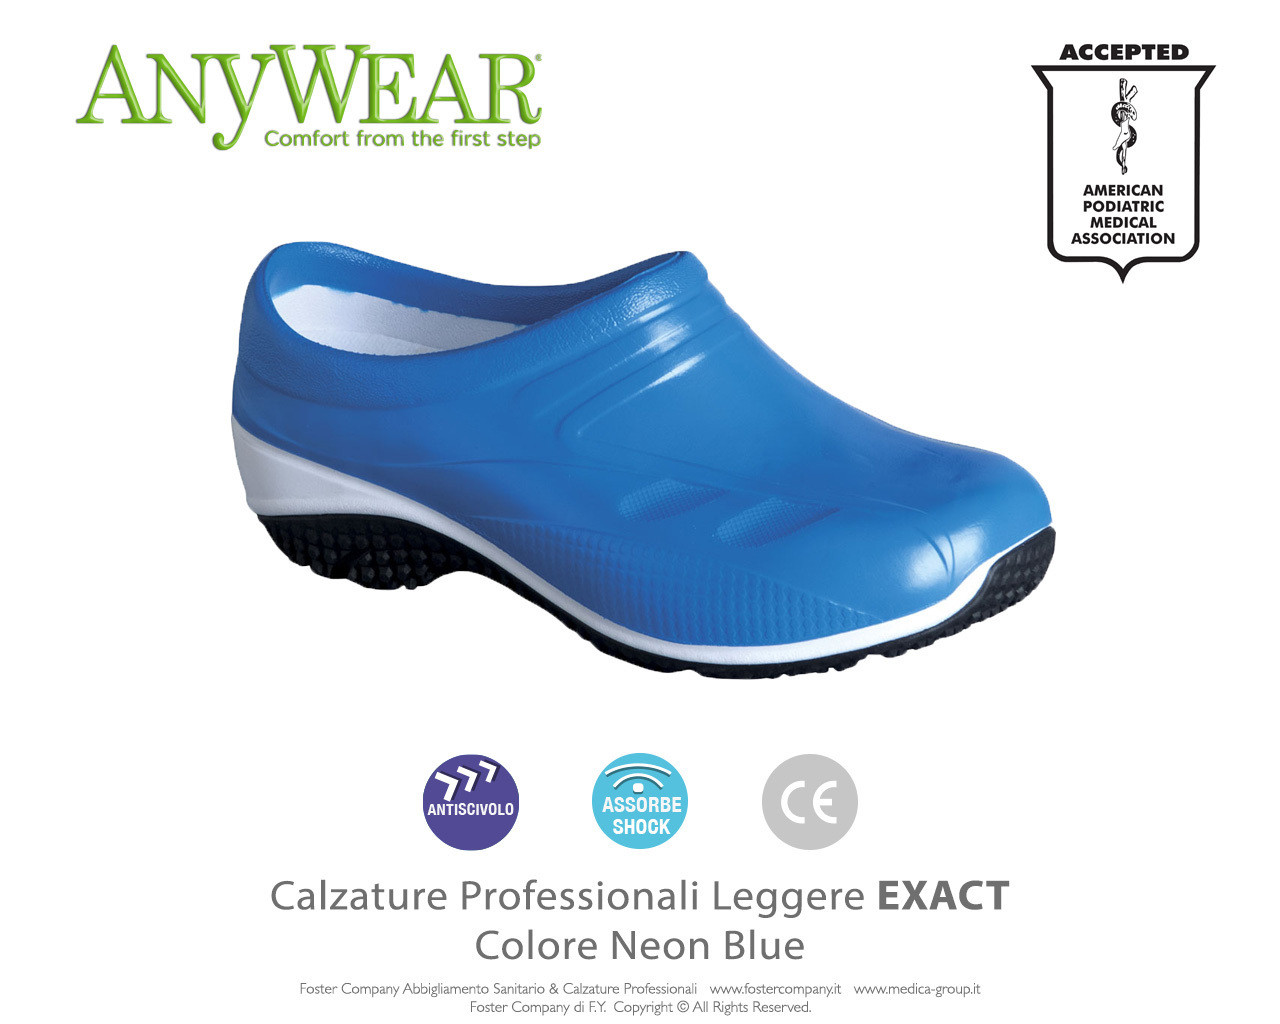 Calzature Professionali Anywear EXACT Colore Neon - FINE SERIE